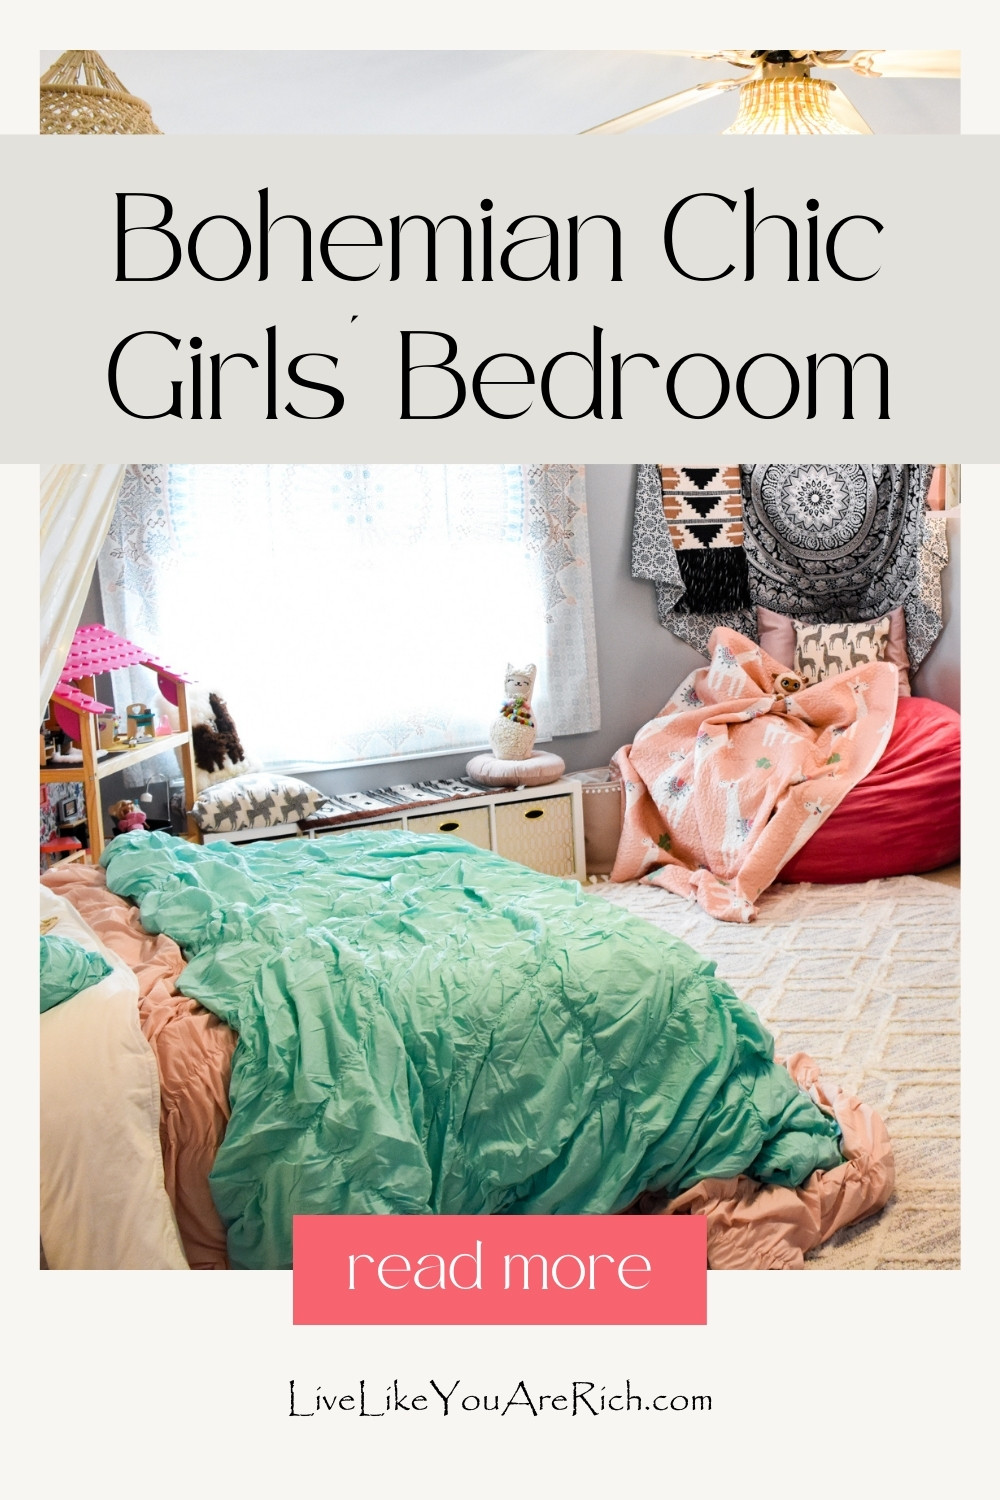 Bohemian Chic Girls' Bedroom